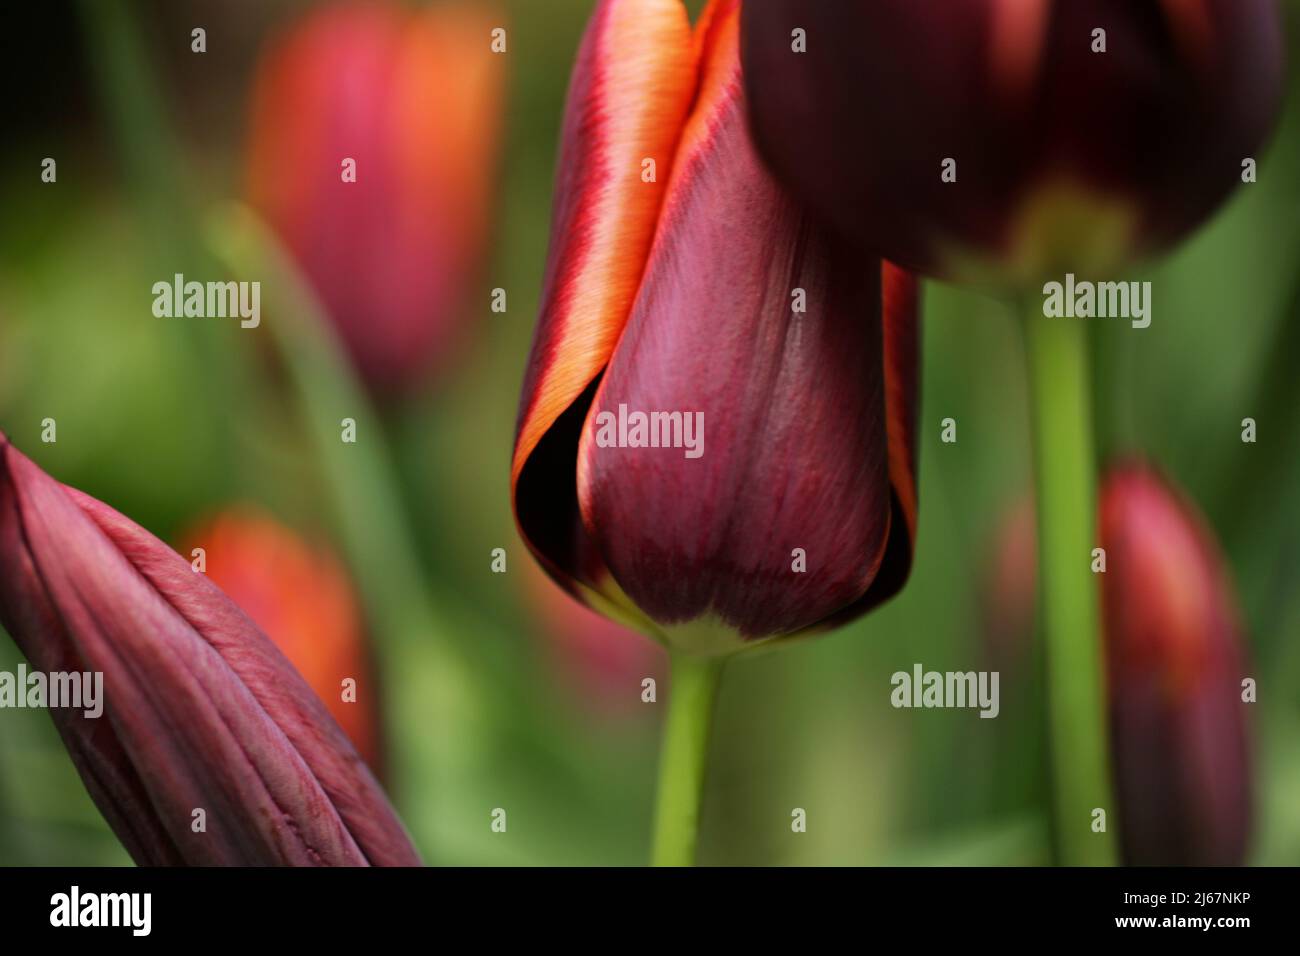 Tulip 'Slawa' Stock Photo